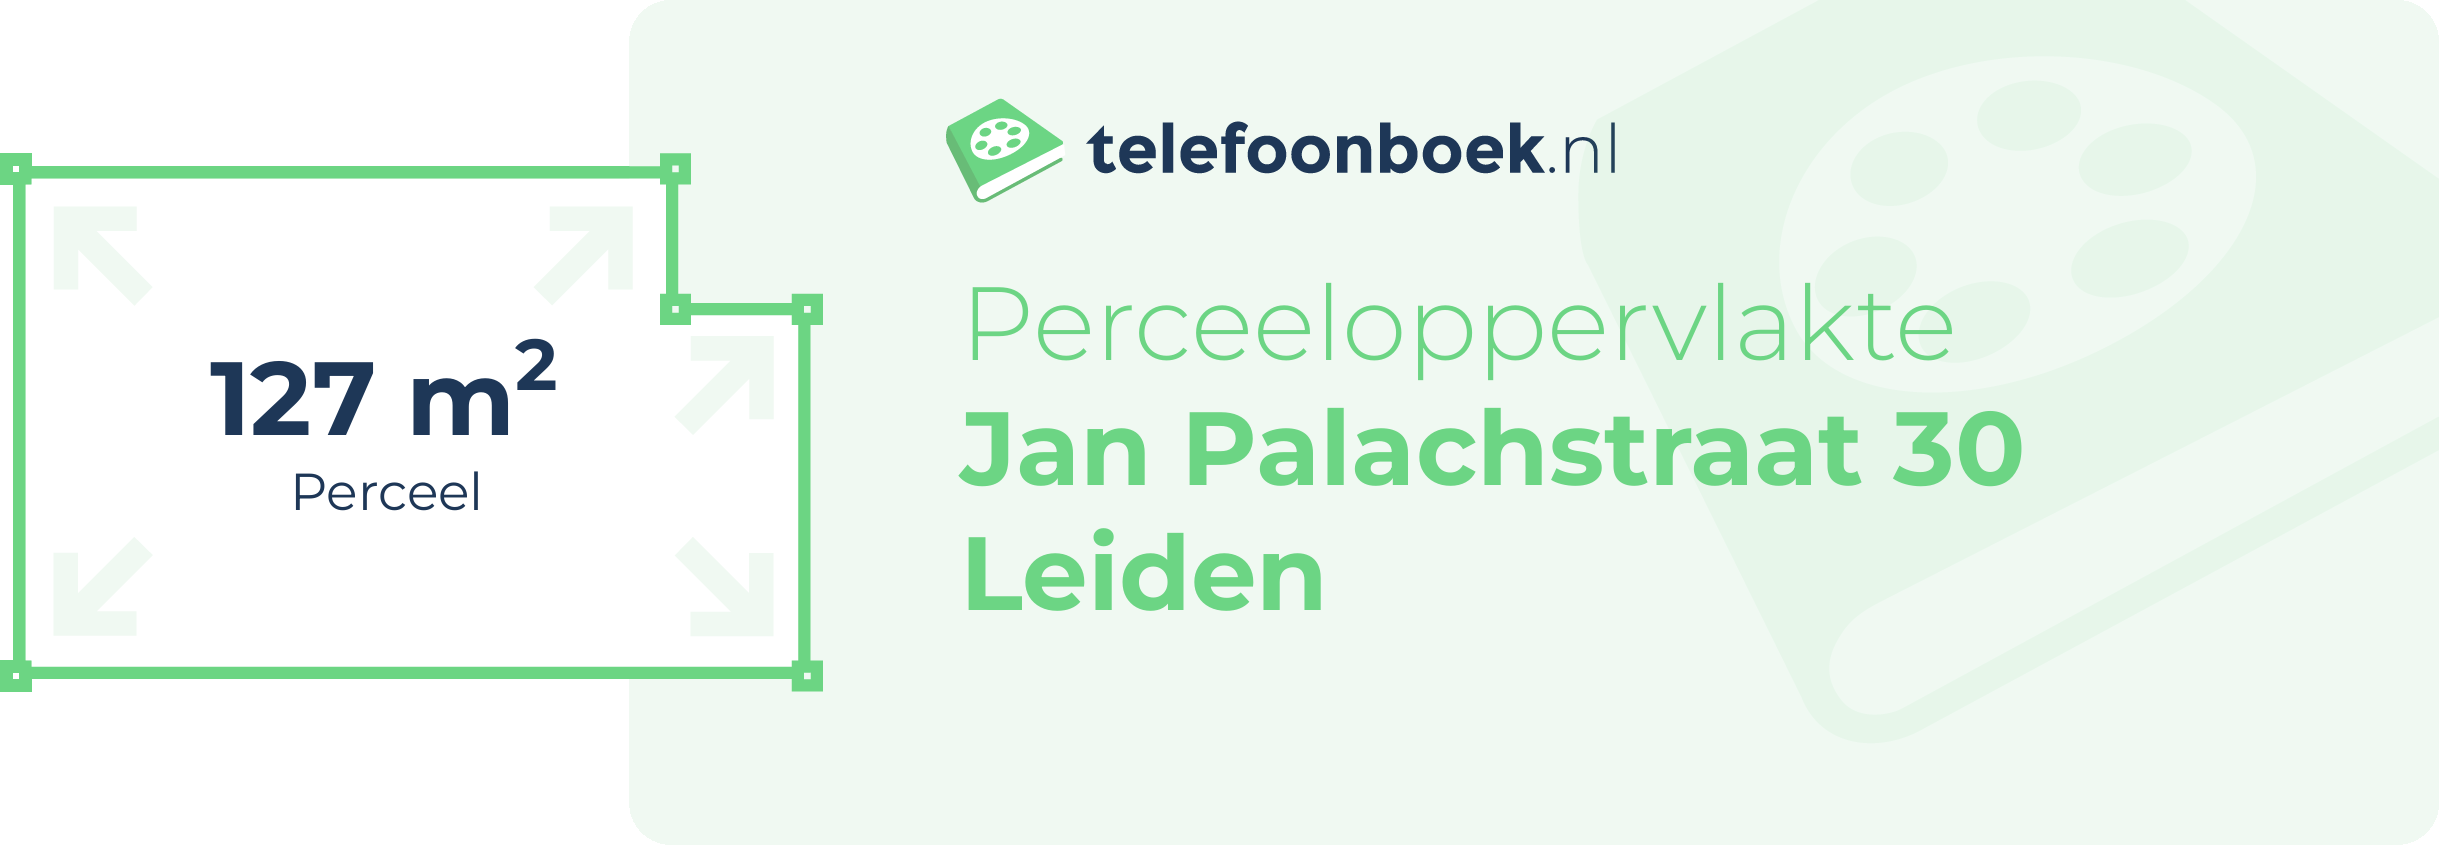 Perceeloppervlakte Jan Palachstraat 30 Leiden